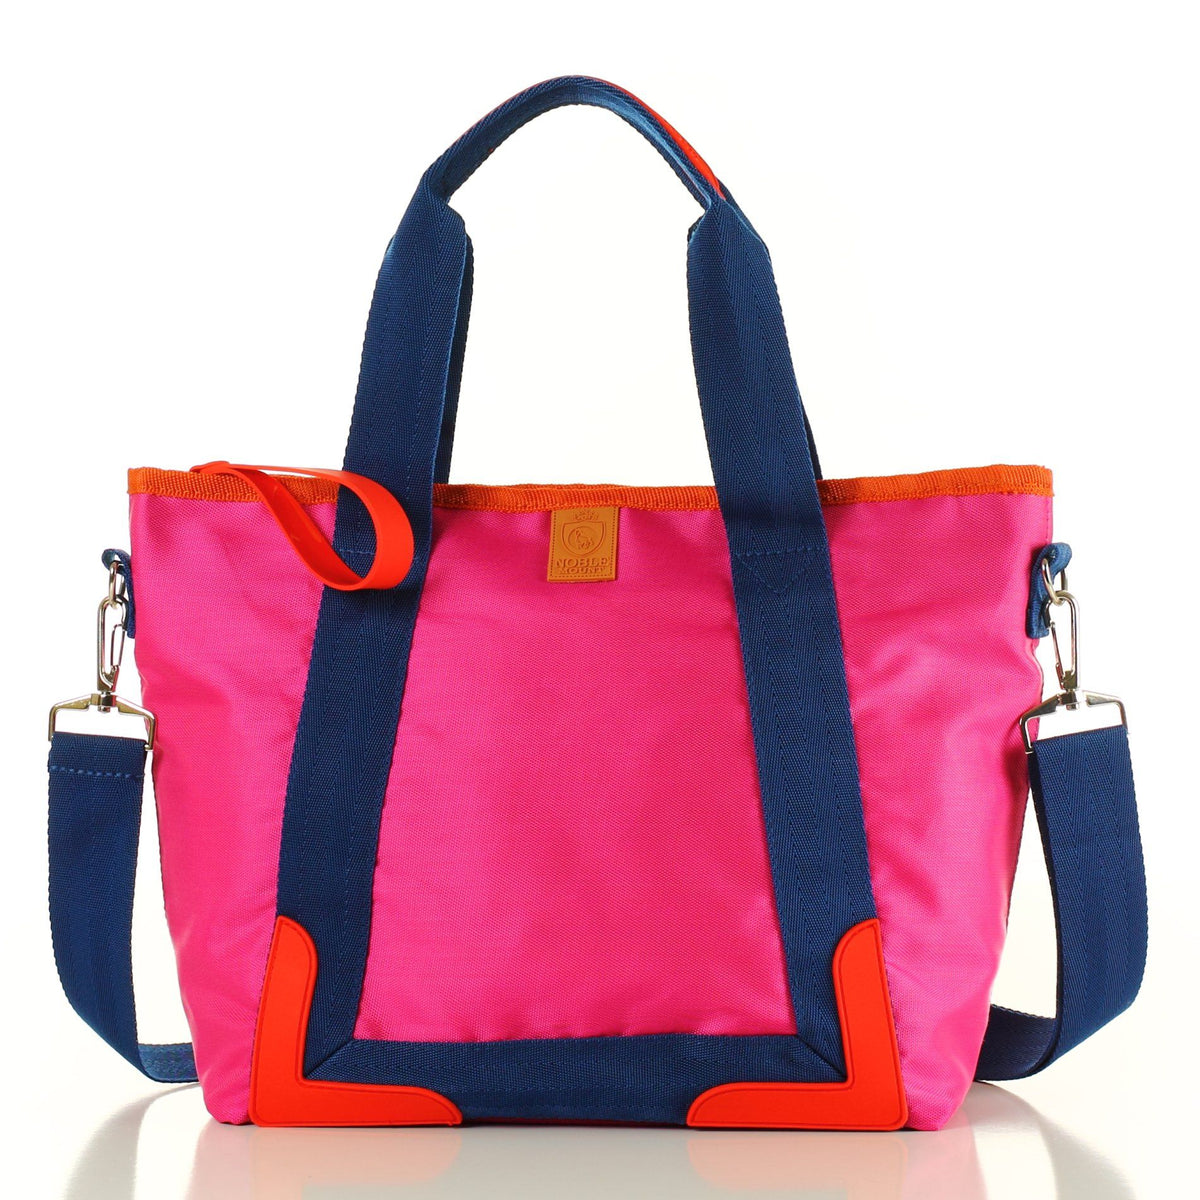 Colorsplash Tote Bag